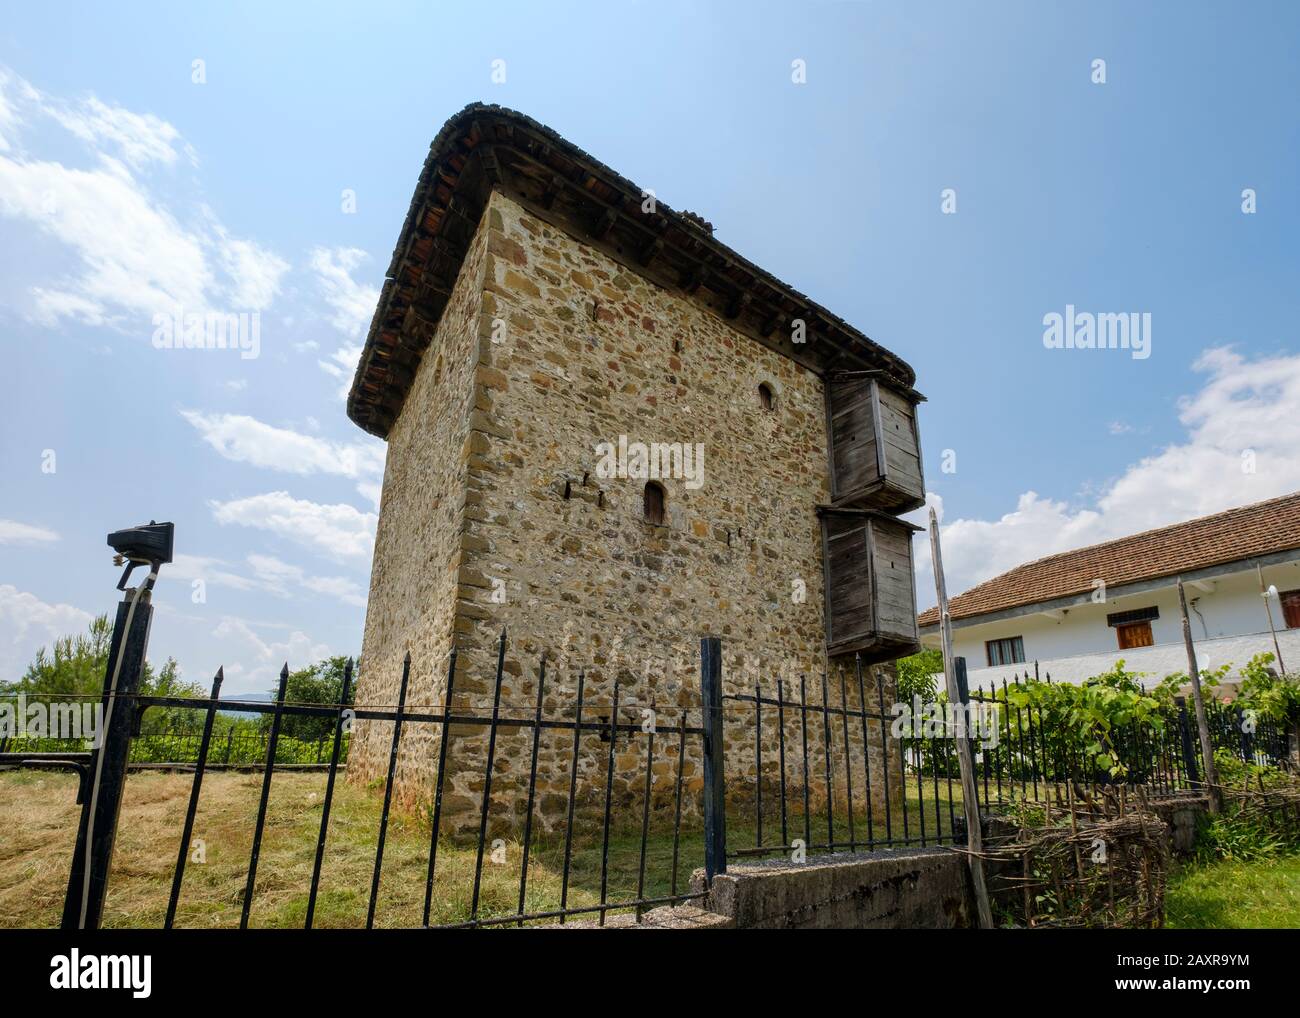 Kulla e Mic Sokolit in Bujan, Tropoja, Qark Kukes, Albanien Stockfoto